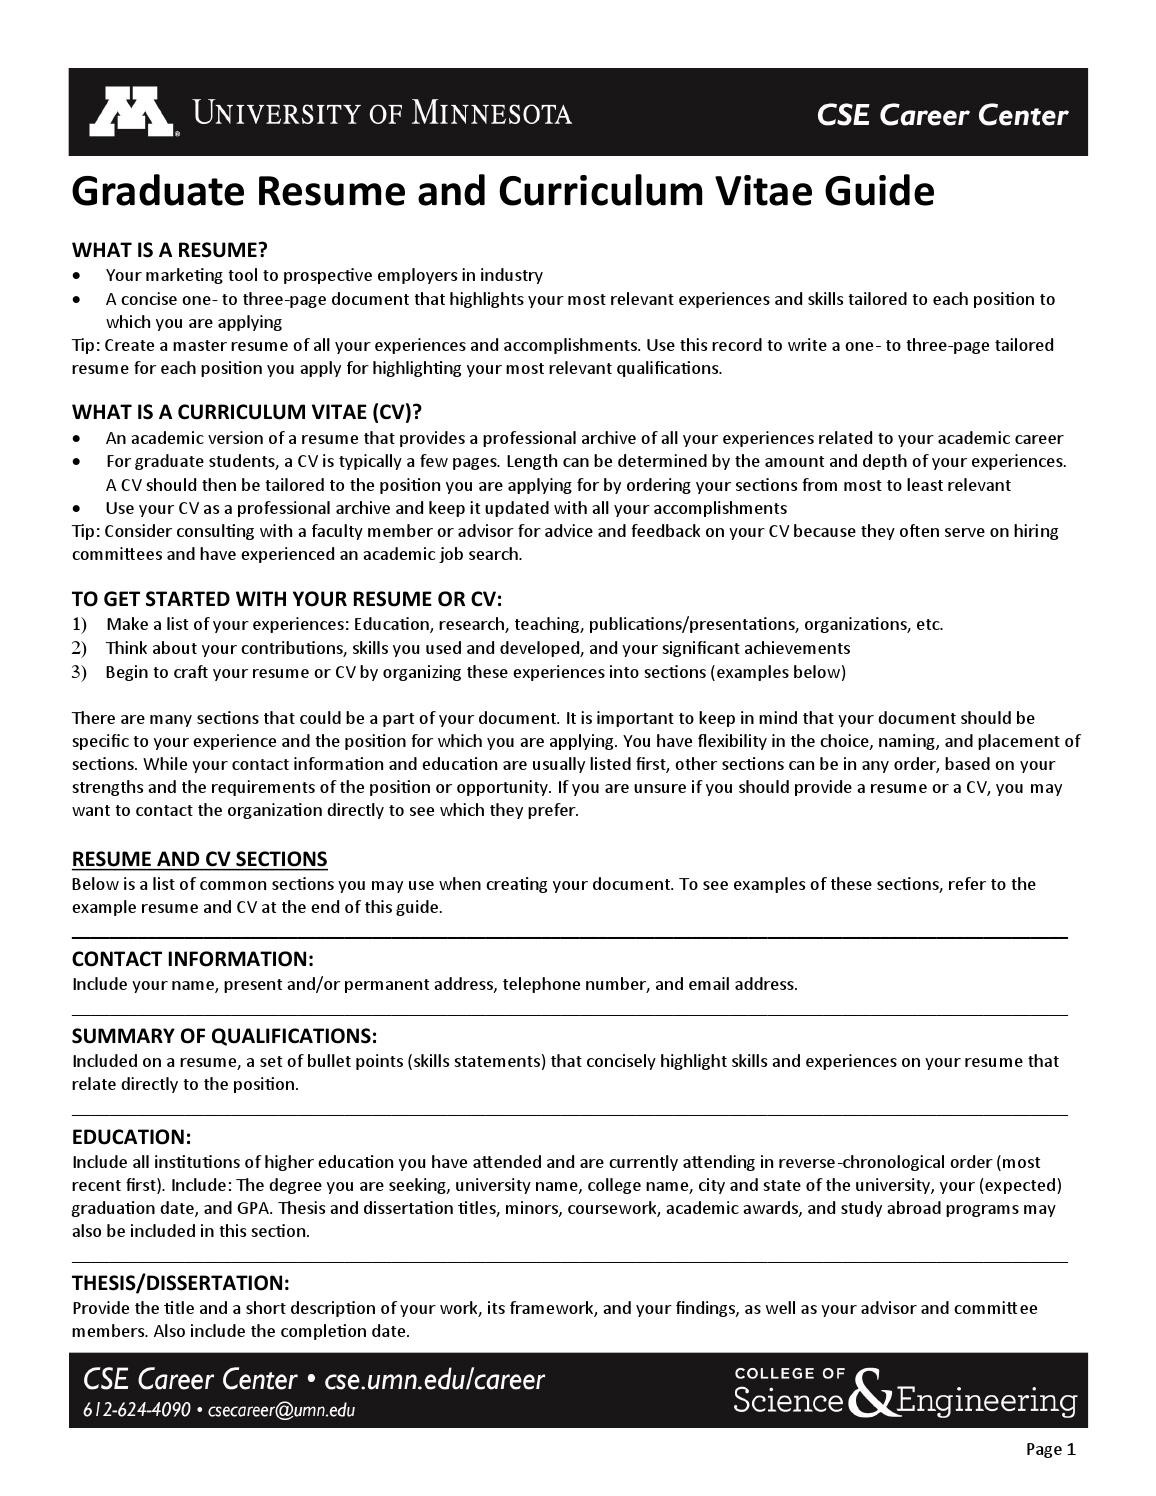 Sample Resume with Expected Graduation Date Graduate Resume and Curriculum Vitae Guide by Armenatzoglou Maria …